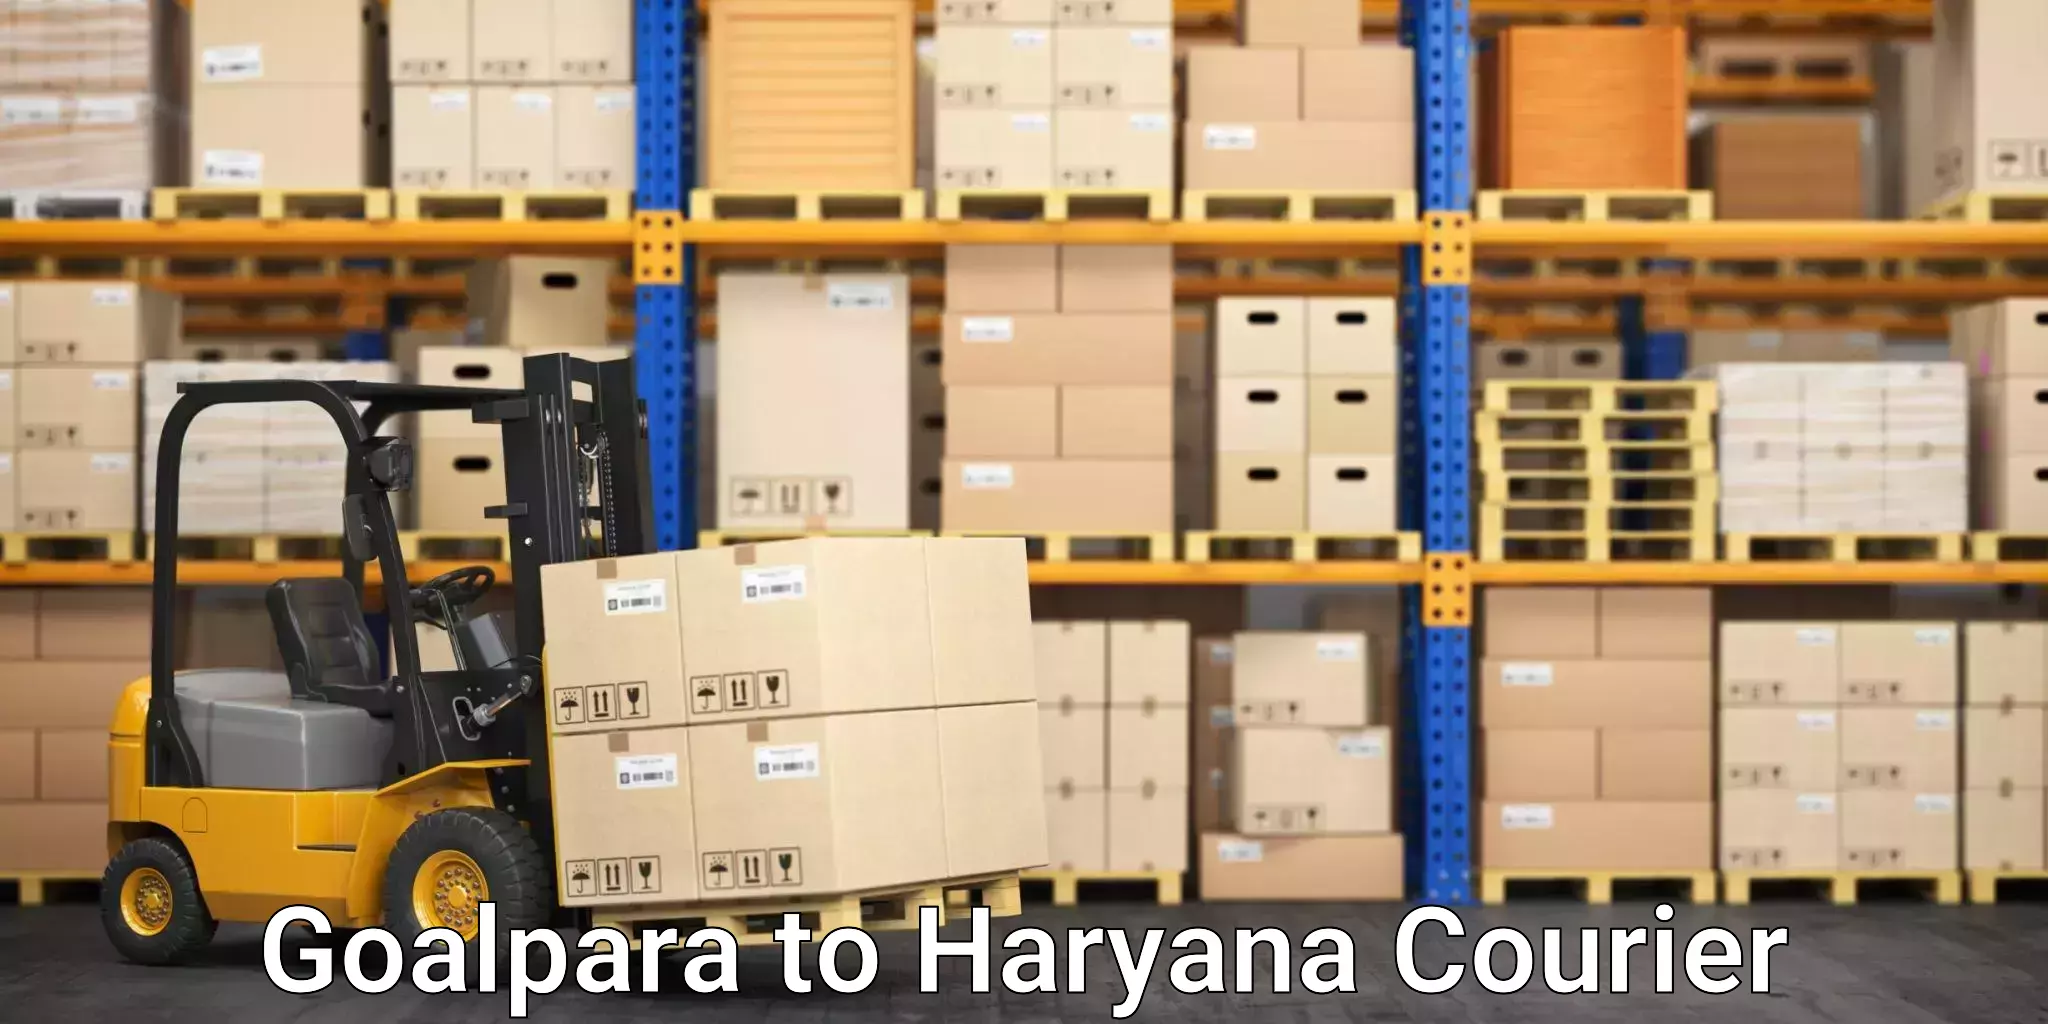 High-performance logistics Goalpara to Sohna